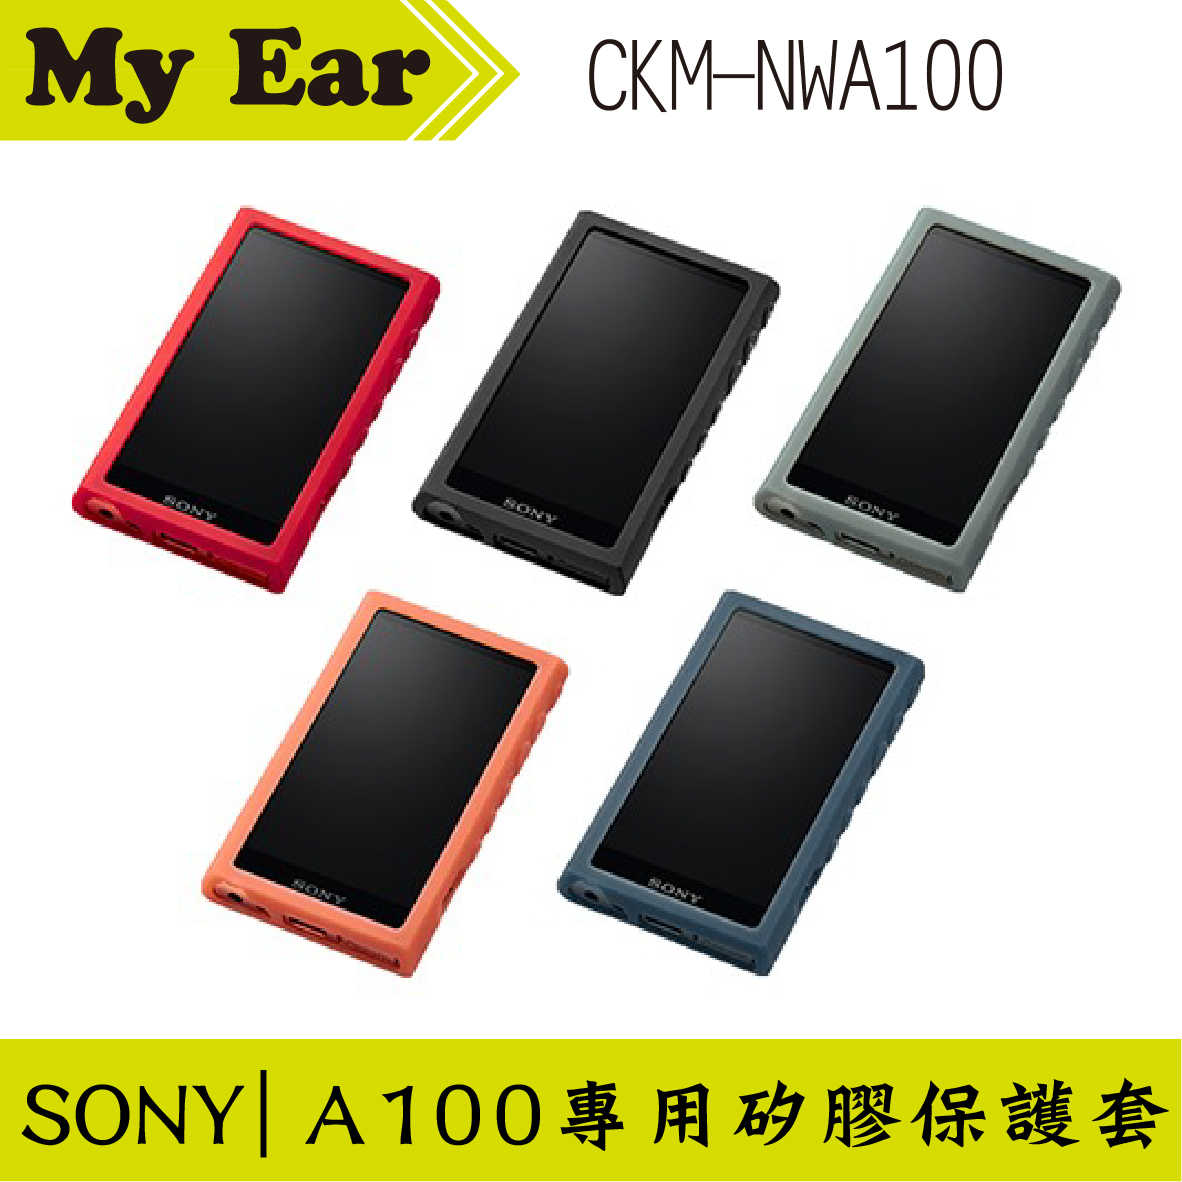 SONY 索尼 CKM-NWA100 黑色 Walkman® 專用矽膠保護殼 | My Ear 耳機專門店